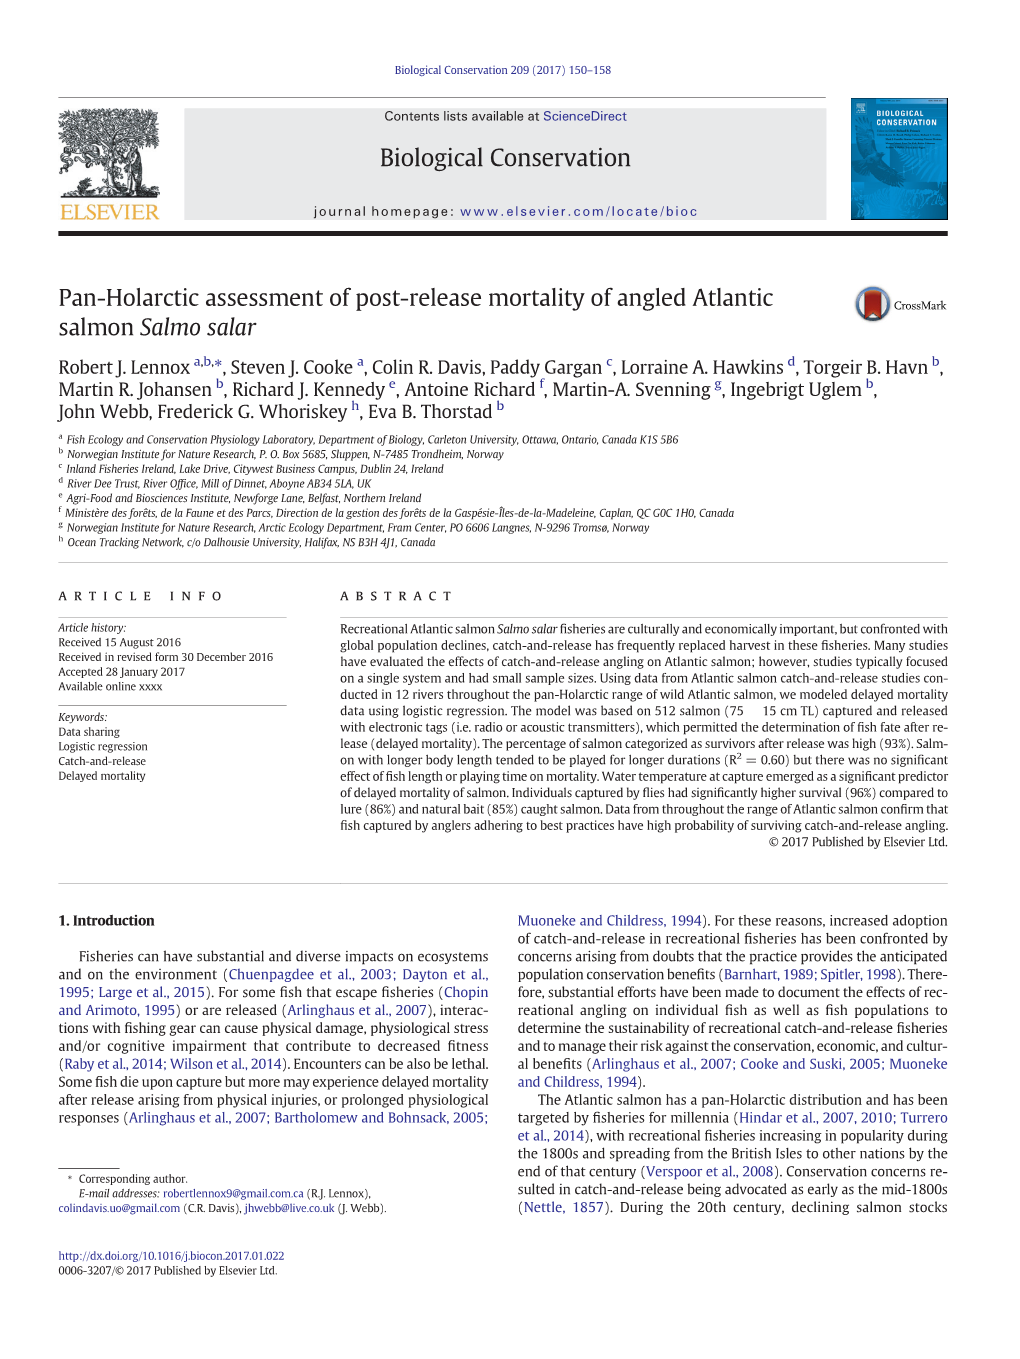 Pan-Holarctic Assessment of Post-Release Mortality of Angled Atlantic Salmon Salmo Salar